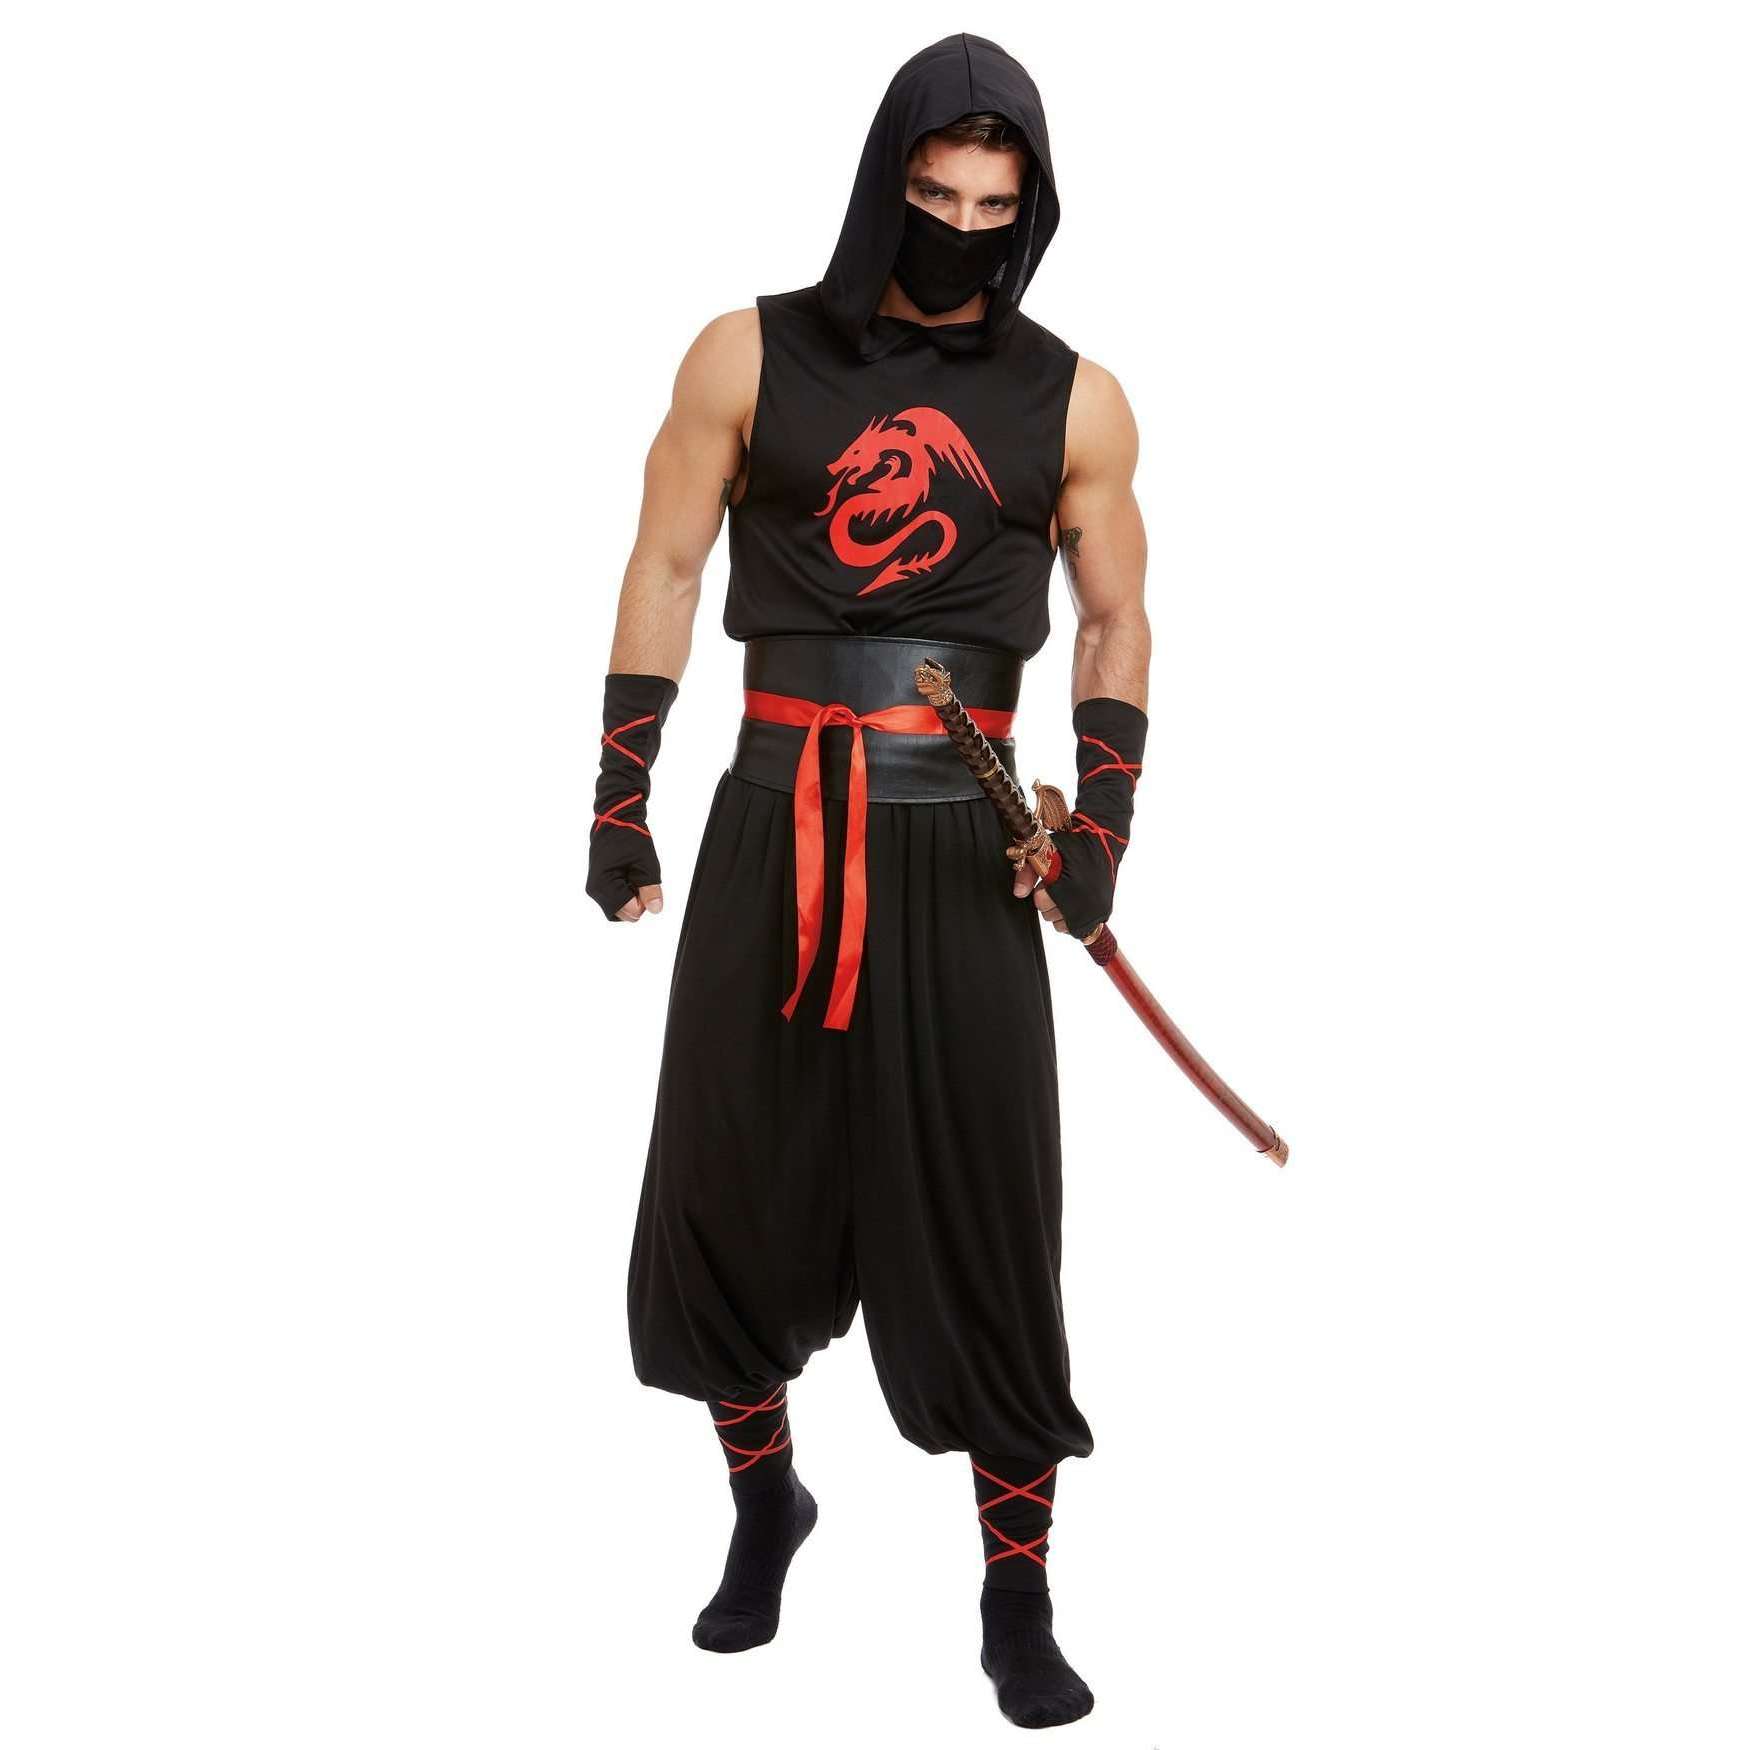 Ninja Assassin: Sneaky but not subtle